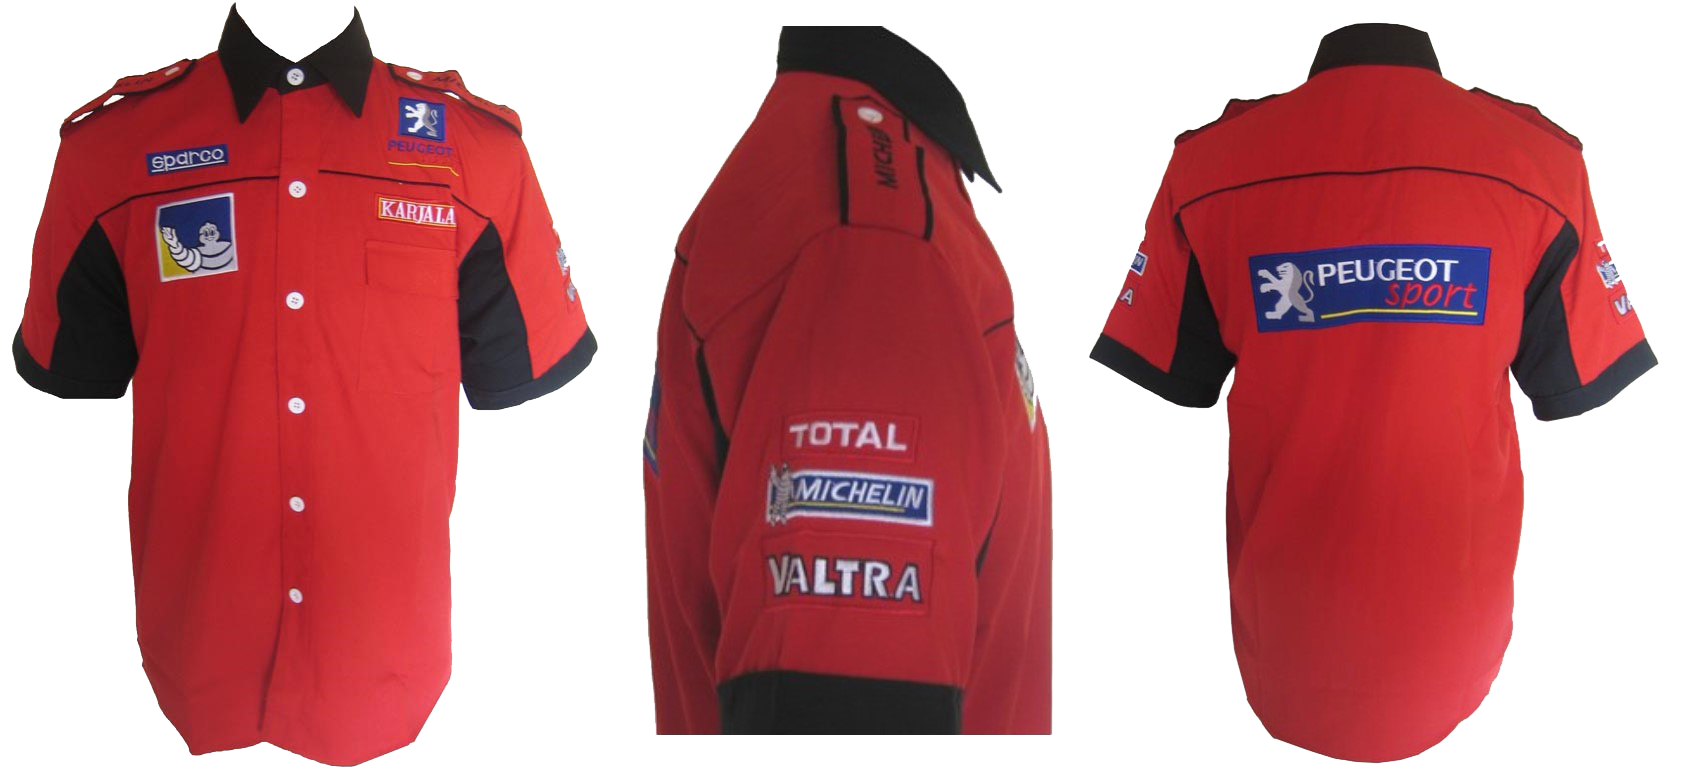 Peugeot Valtra Shirt